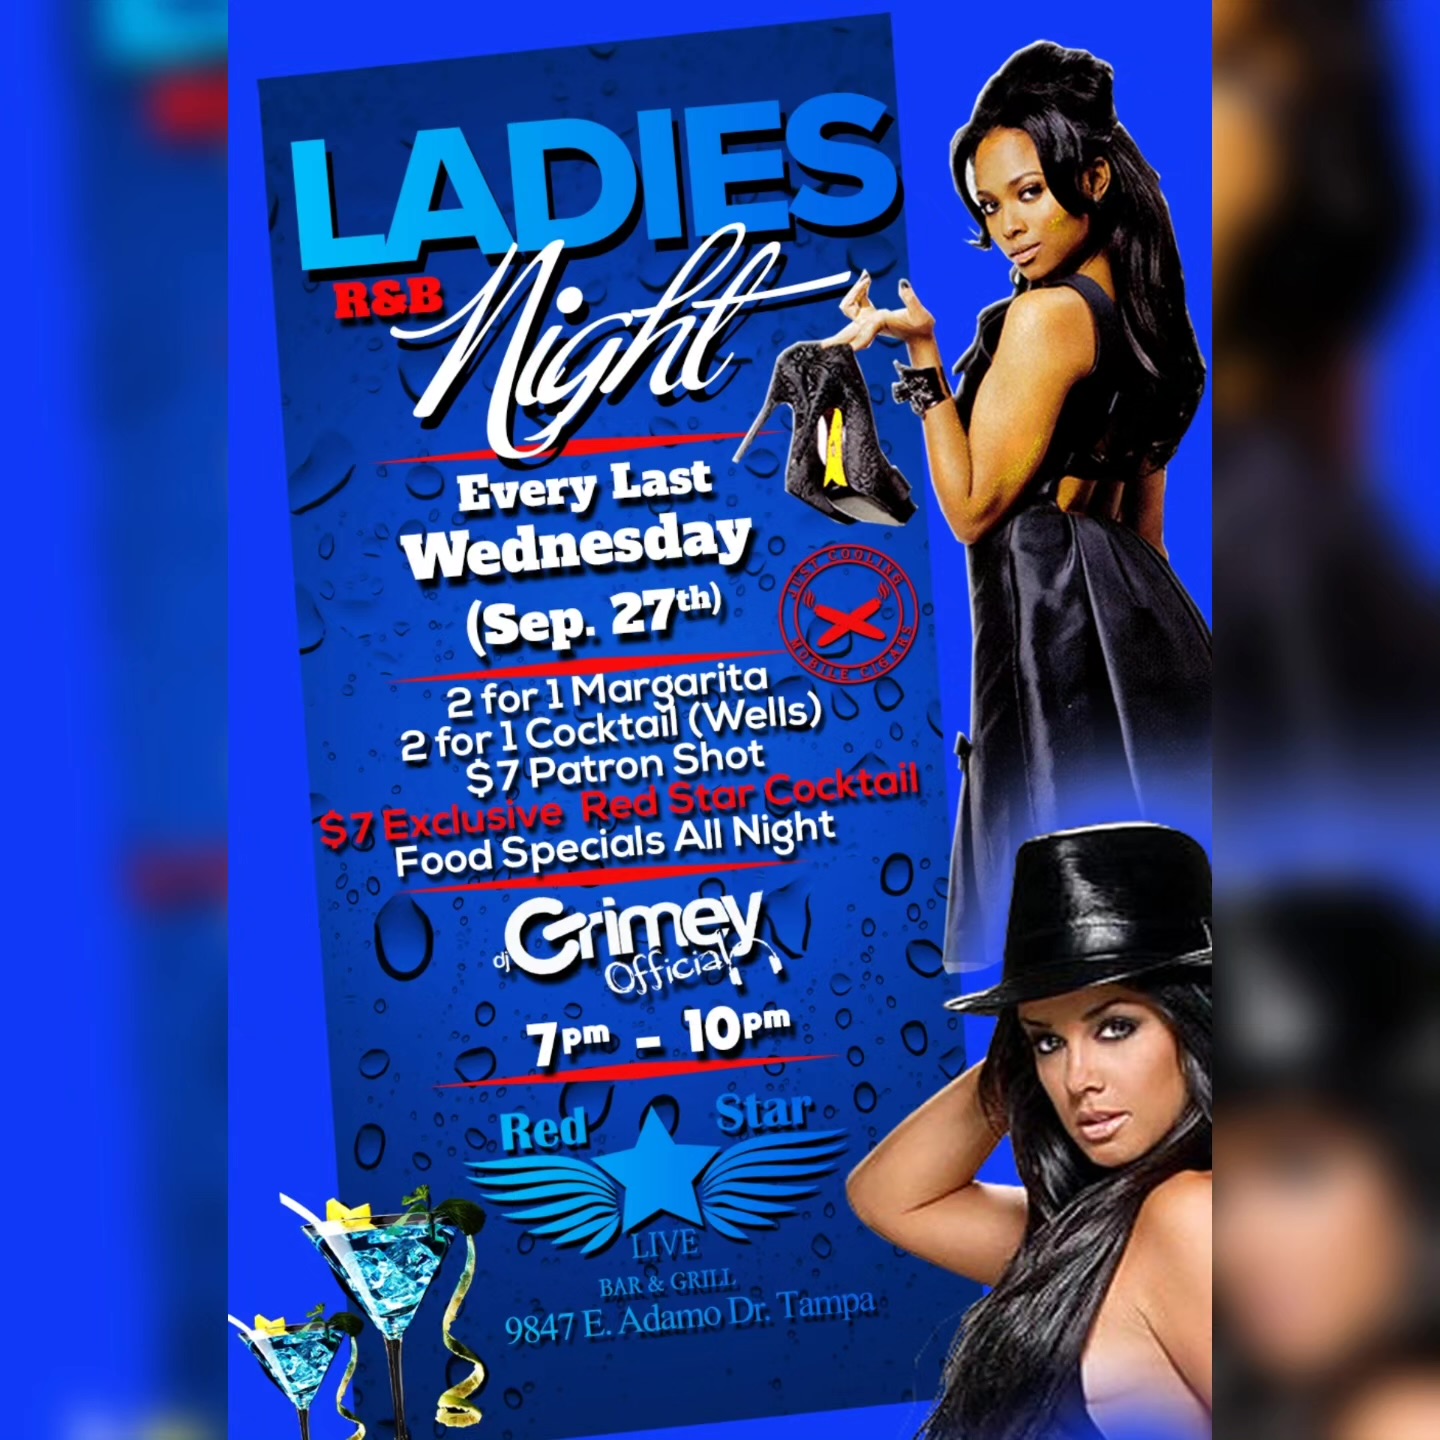 Ladies Night Flyer